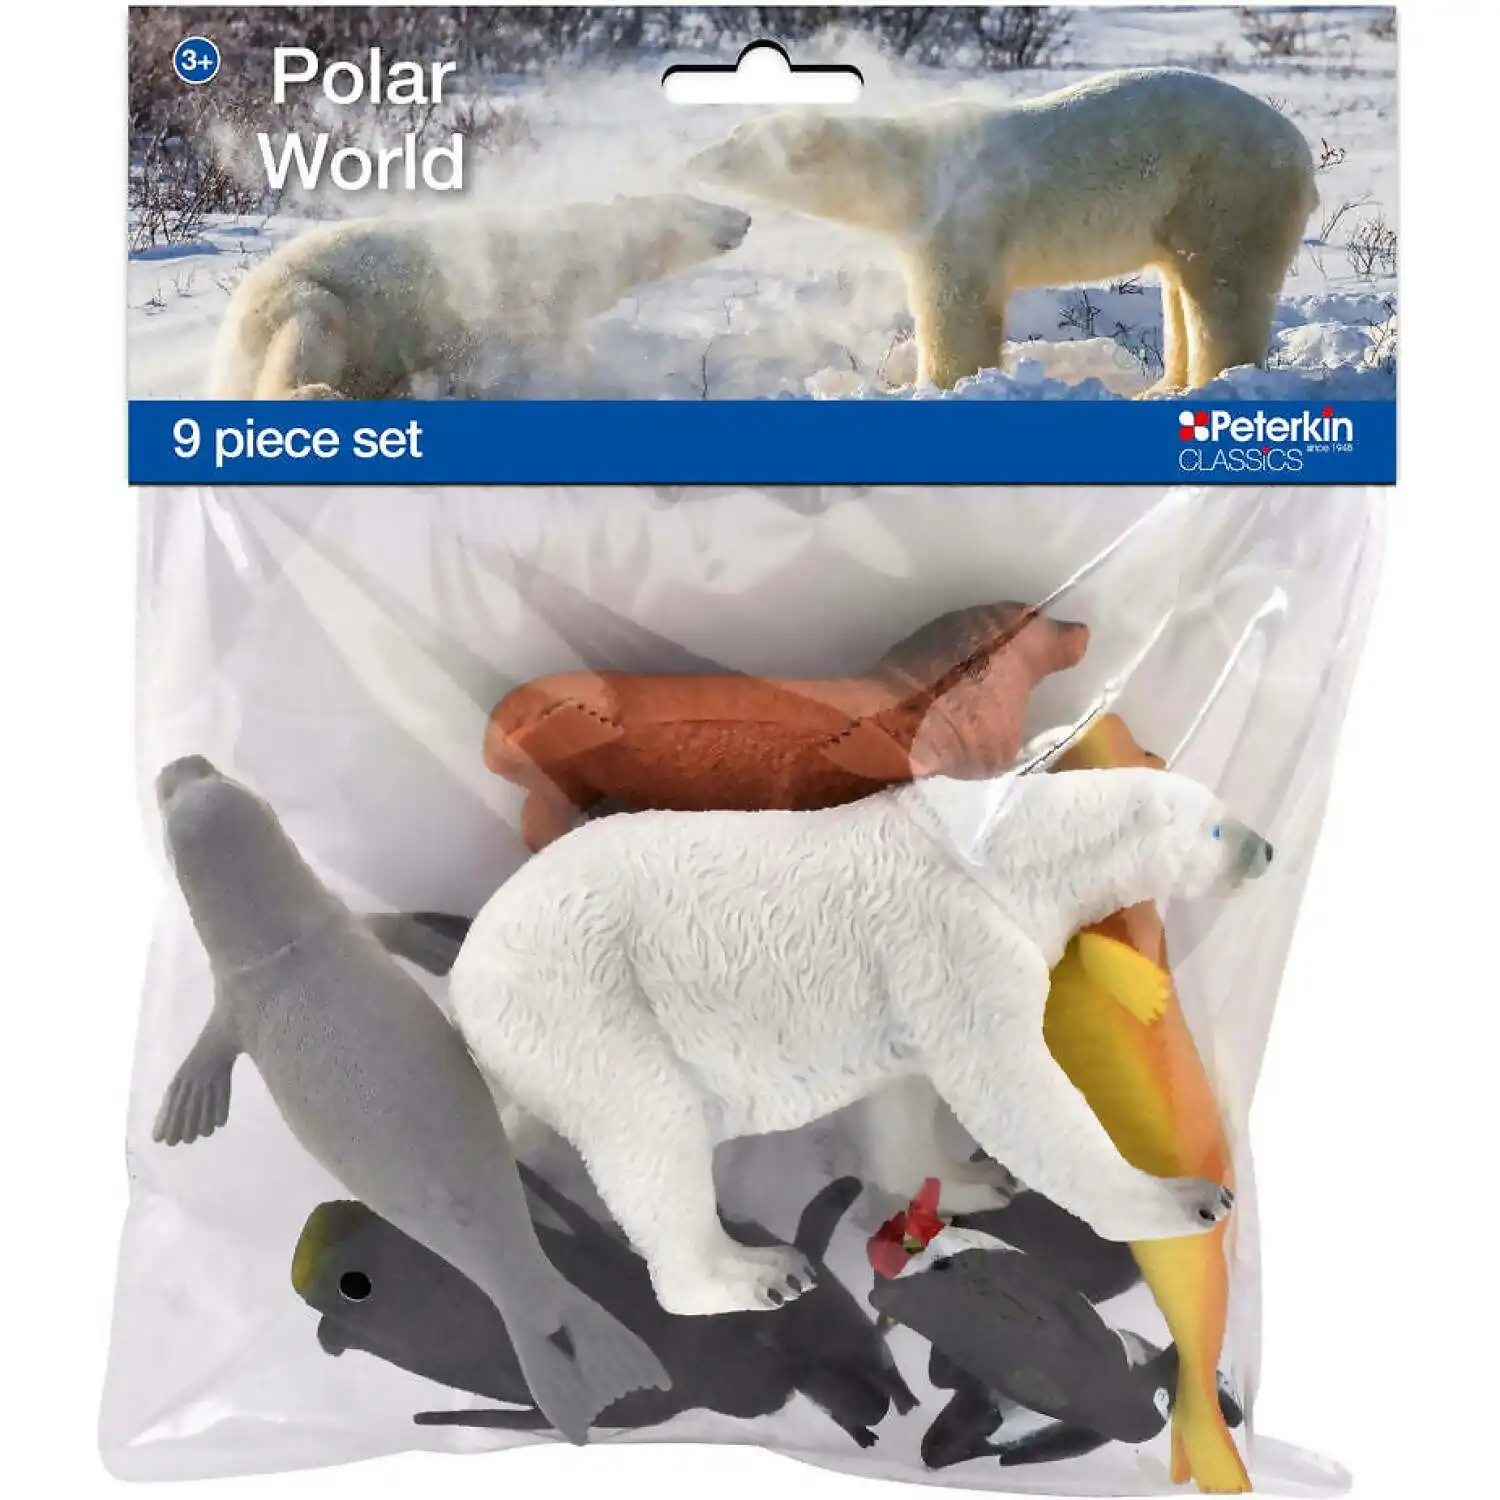 Peterkin - Classics Polar World 8 Piece Figure Set